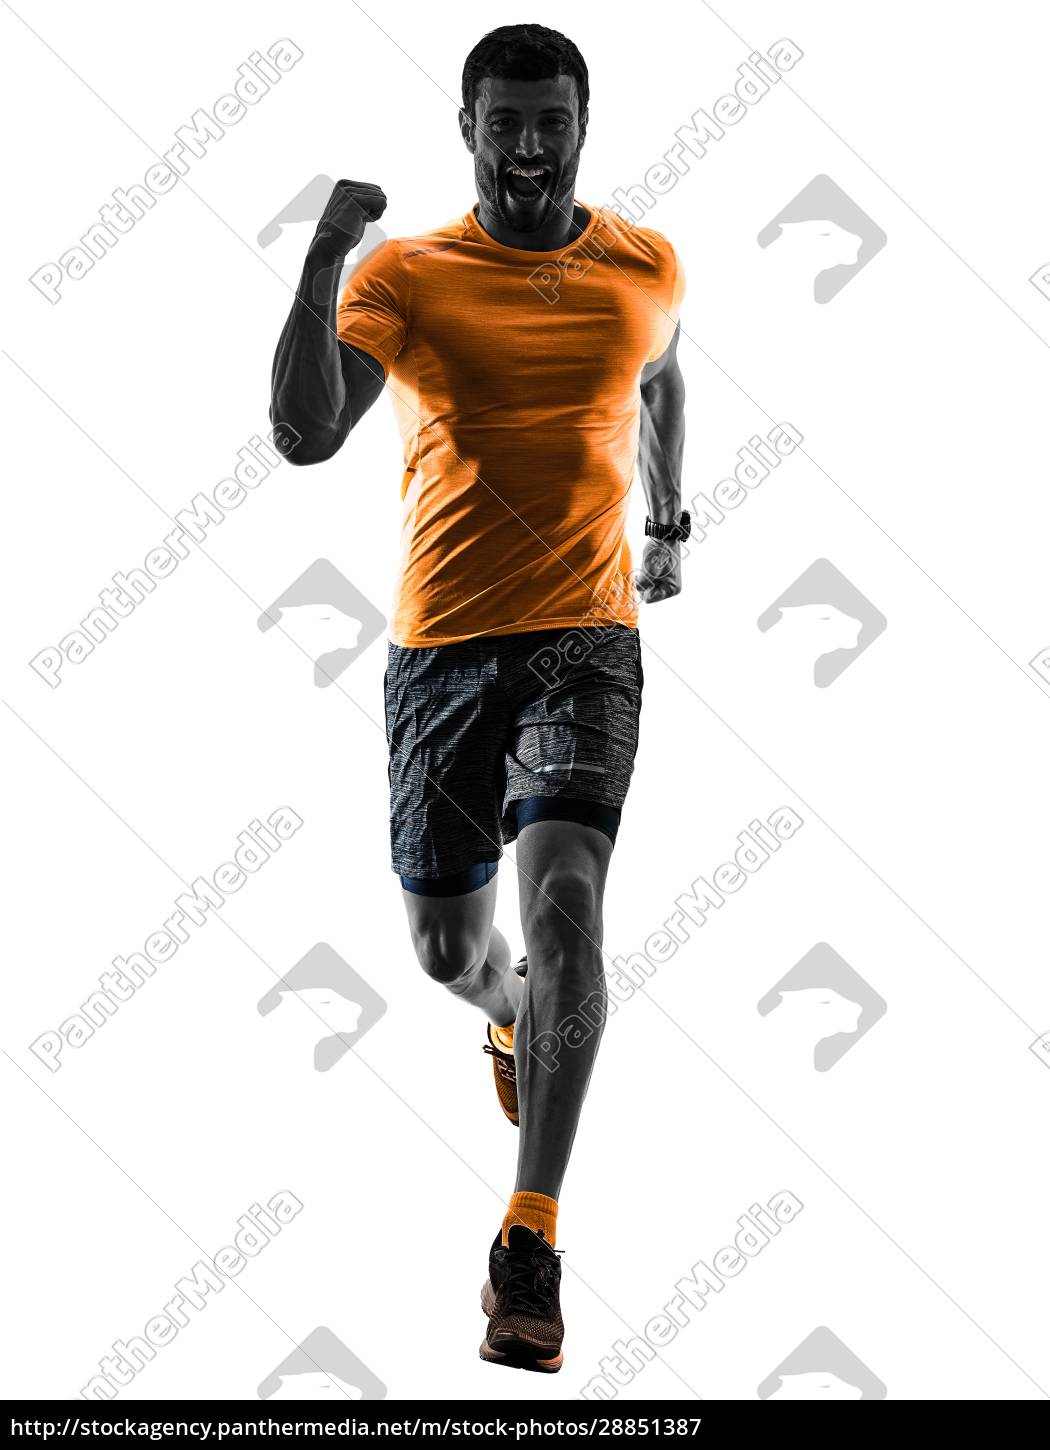 homem corredor correndo corredor correndo silhueta - Stockphoto #28851387